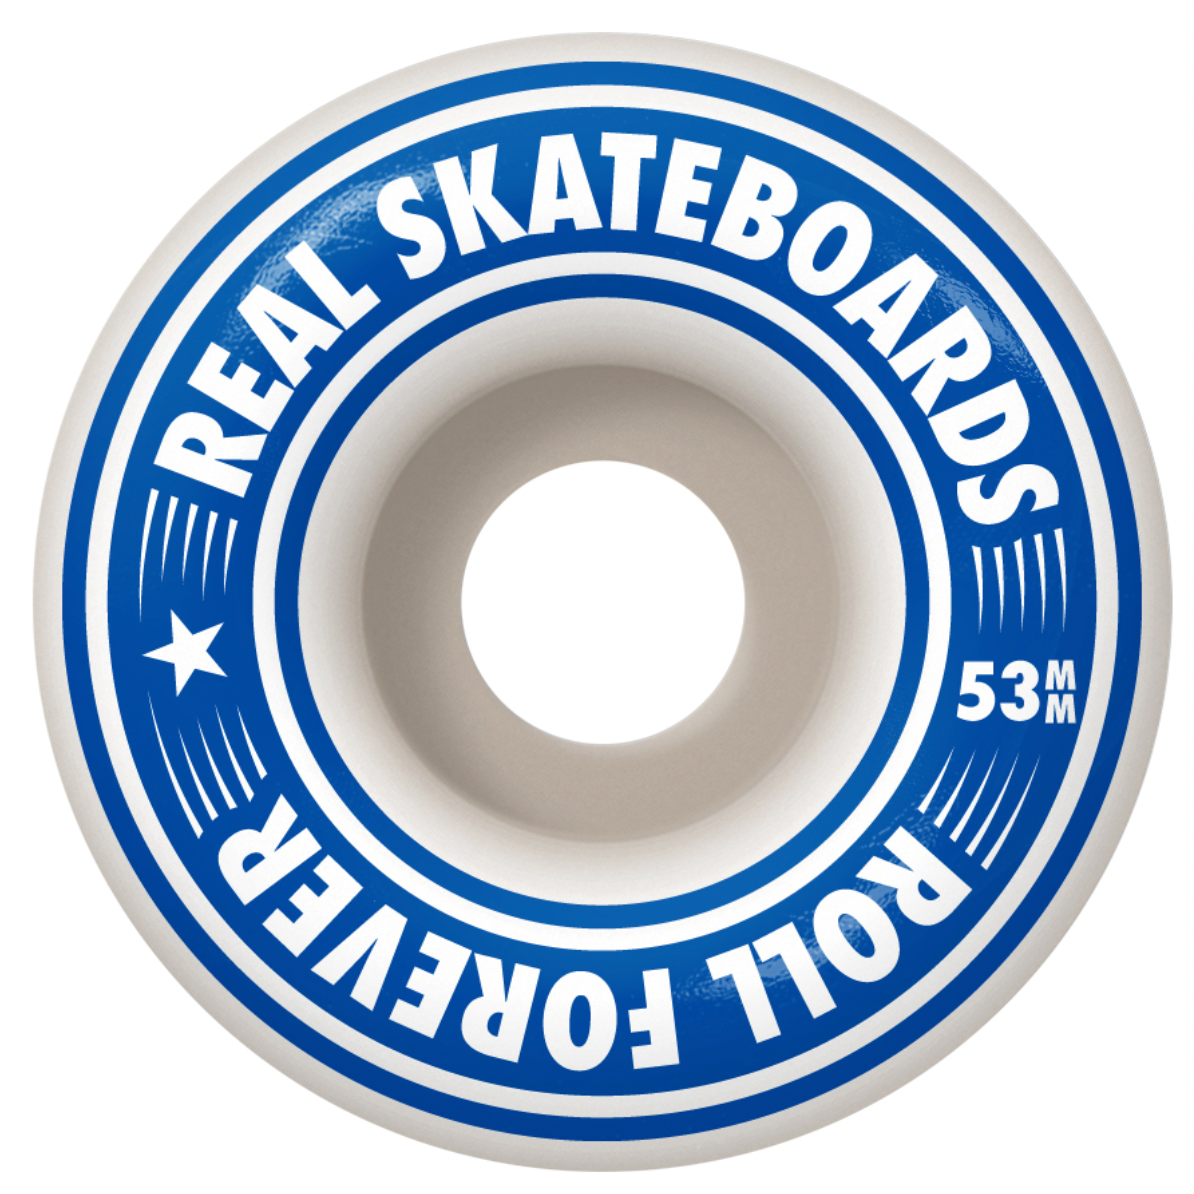 REAL COMPLETE - STEALTH OVALS MED (7.75") - The Drive Skateshop